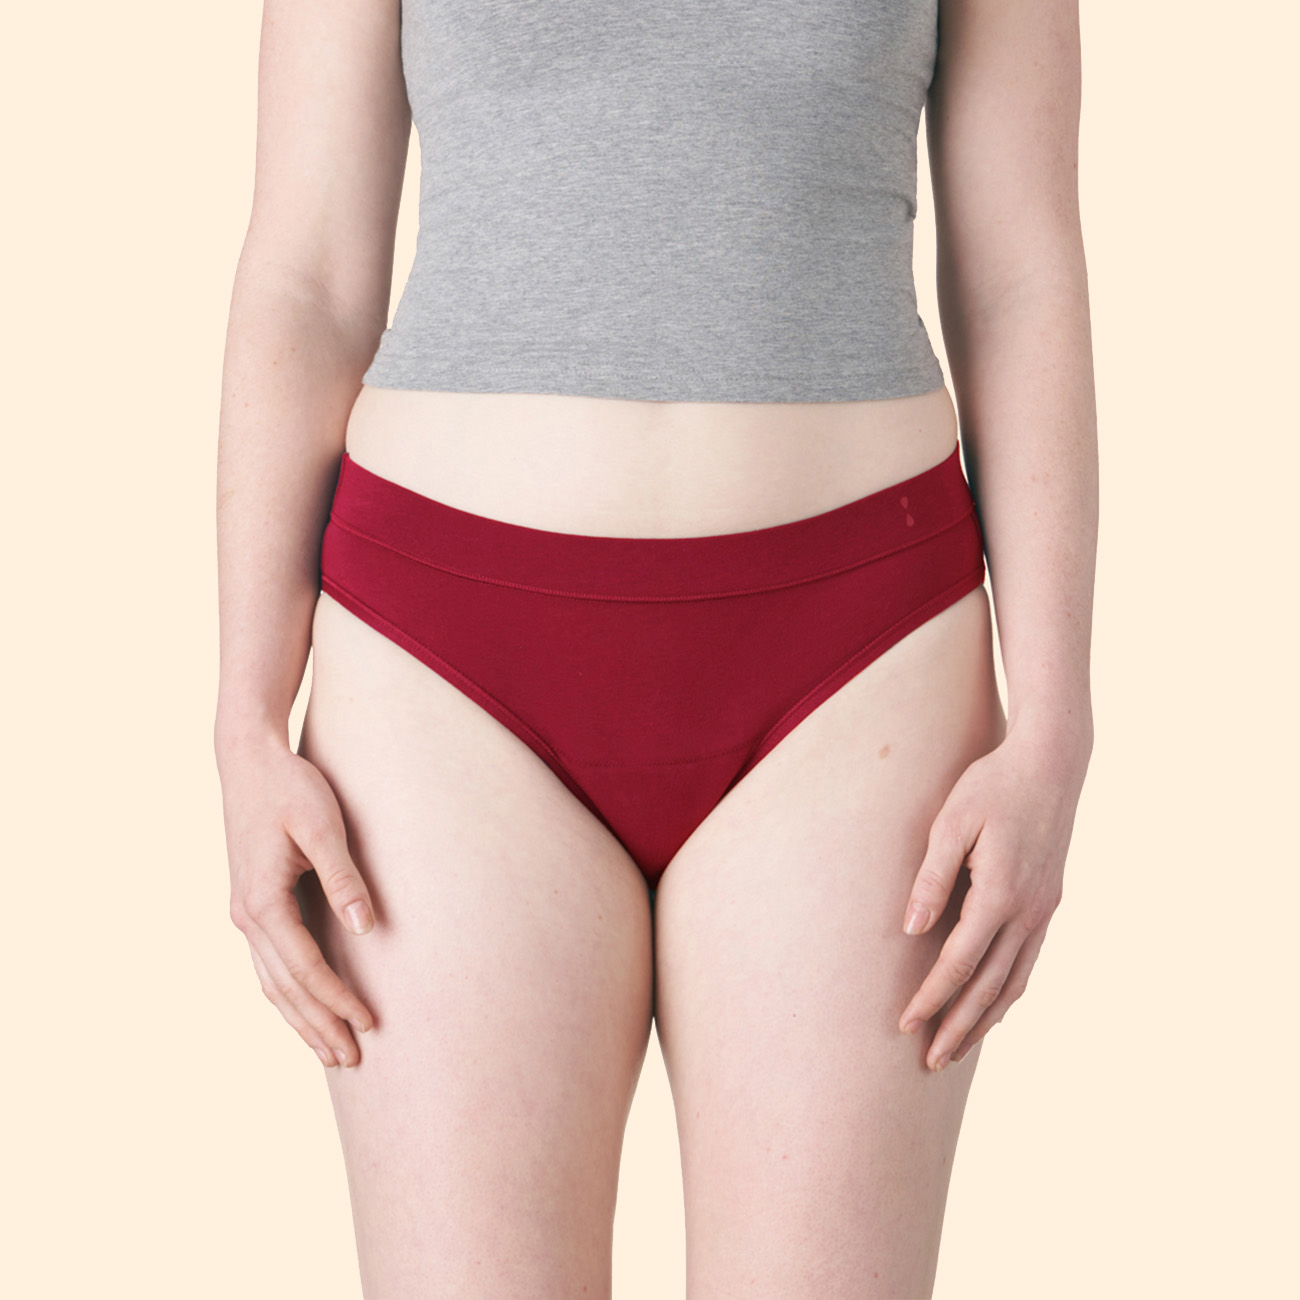 Thinx for All Women's Super Absorbency Bikini Period Underwear Gray Size XL